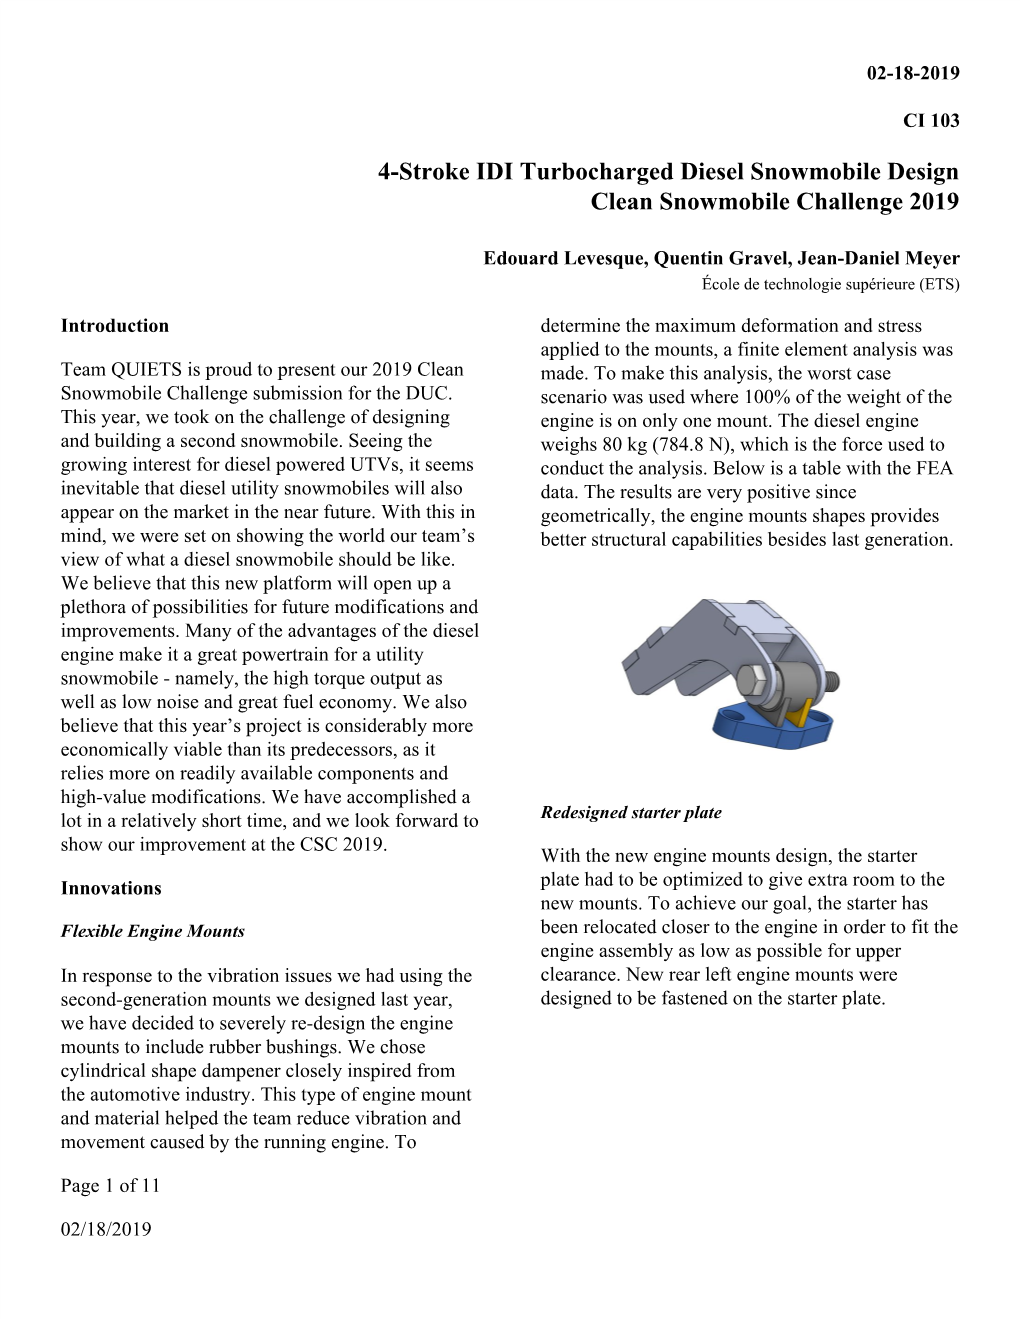 4-Stroke IDI Turbocharged Diesel Snowmobile Design Clean Snowmobile Challenge 2019